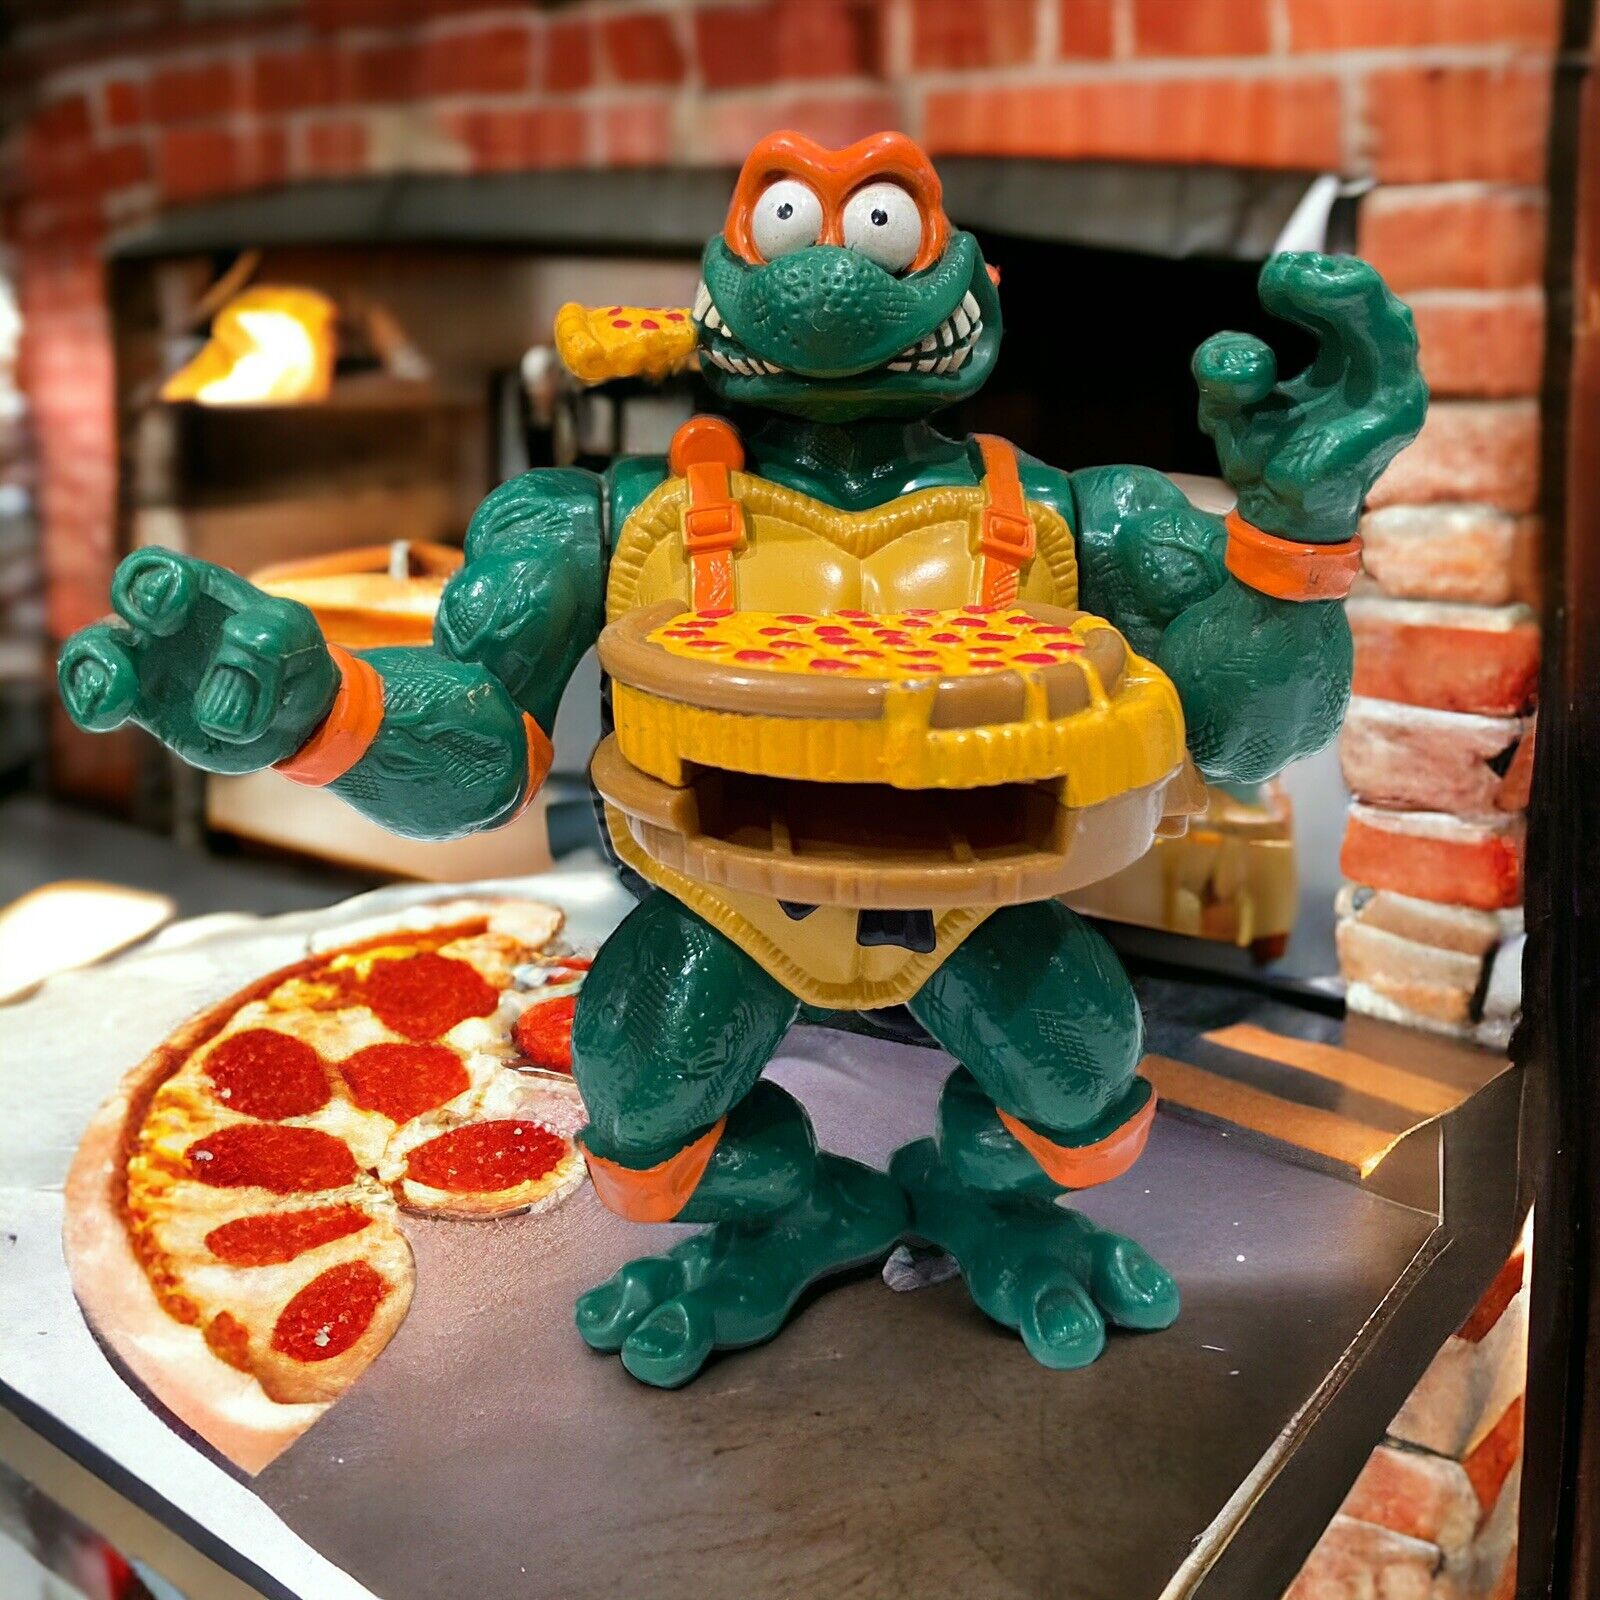 Playmates 1993 TMNT Pizza Tossin Mike with Belt Michelangelo Ninja Turtle Figure